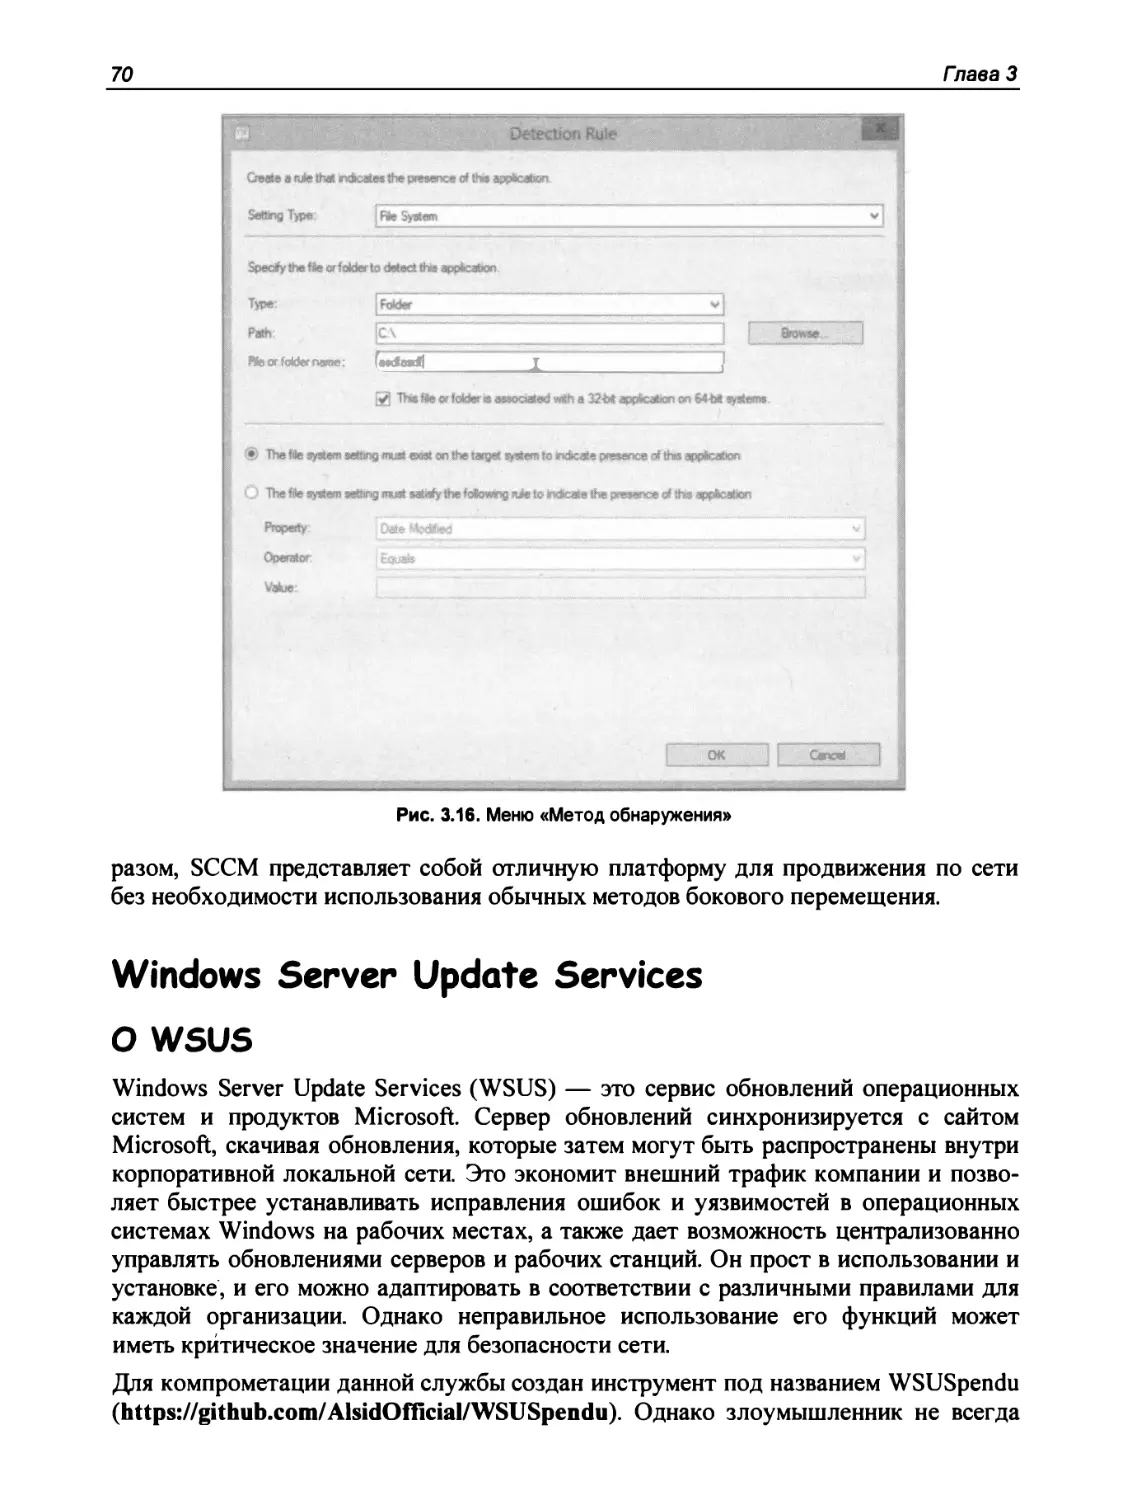 Windows Server Update Services
О WSUS